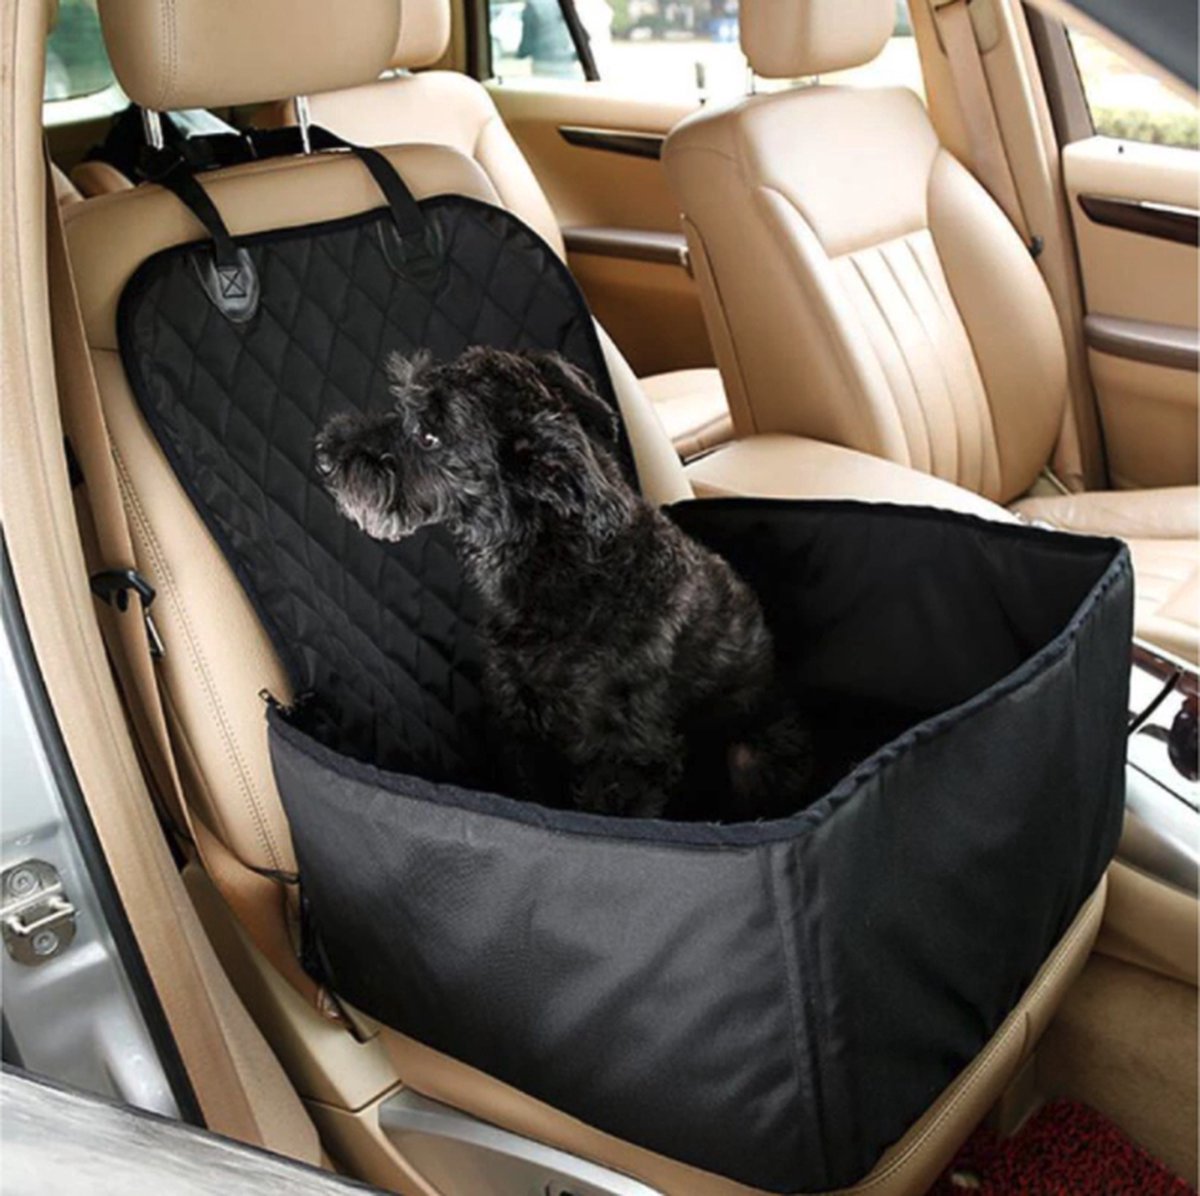 ***Autostoel Hondenmand voor auto - 45/45cm - Autostoel Hond/Kat - Reisbench - Reismand - Stoelhoes - Automand - Autozitje - Beschermhoes - Autobench - van Heble® ***